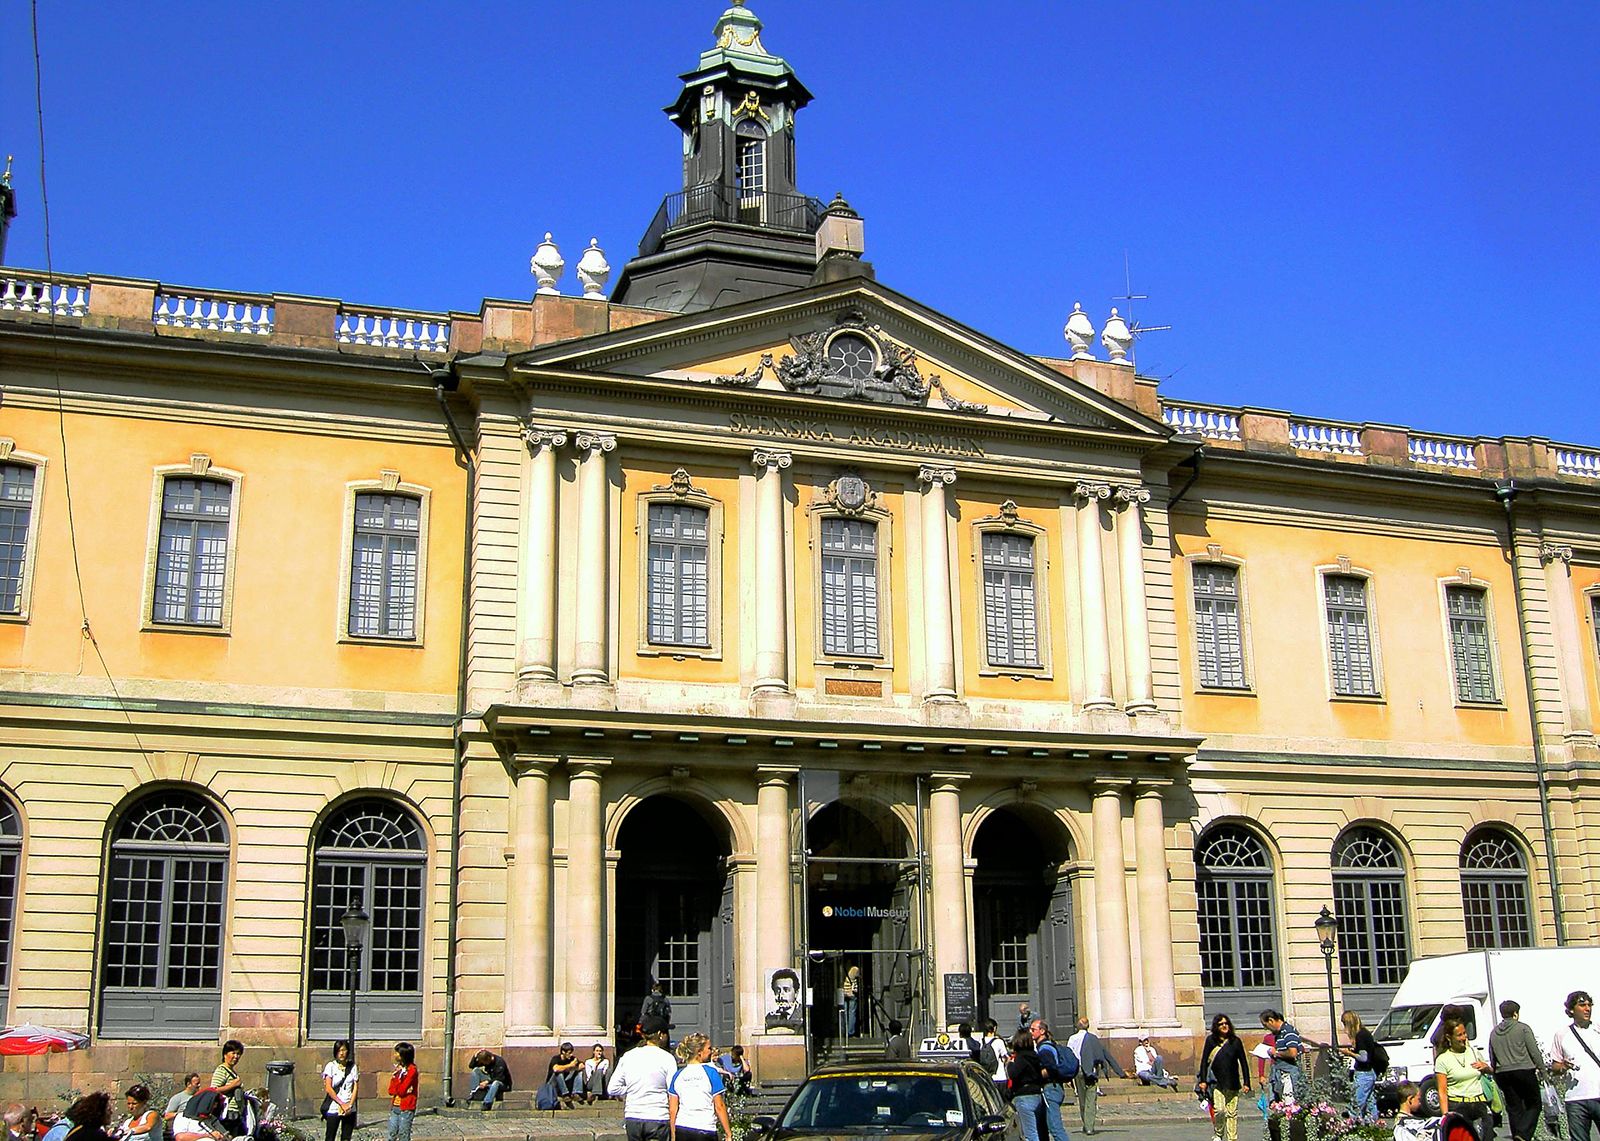 The Swedish Academy